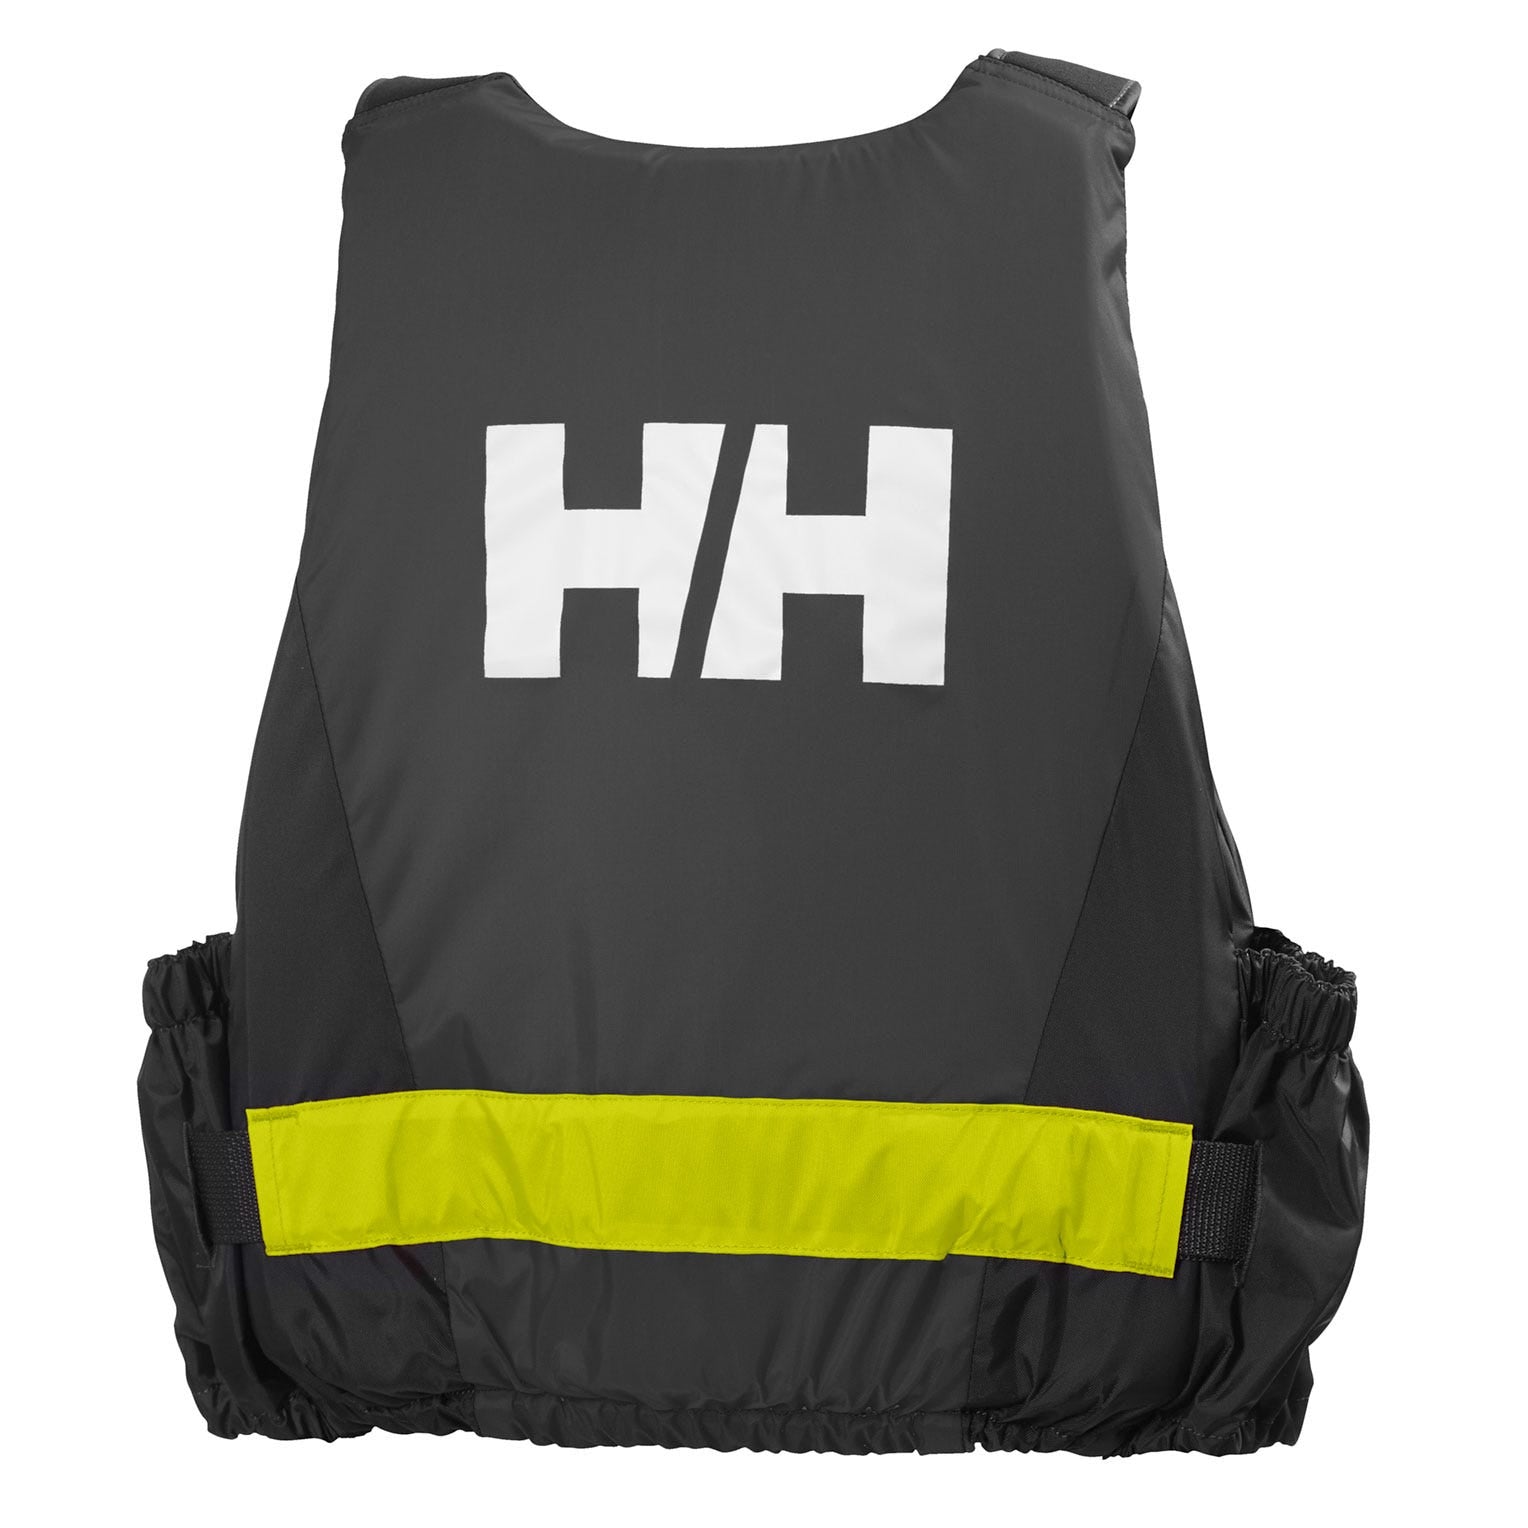 Helly Hansen Rider Life Vest Buoyancy Aid | Helly Hansen | Portwest - The Outdoor Shop